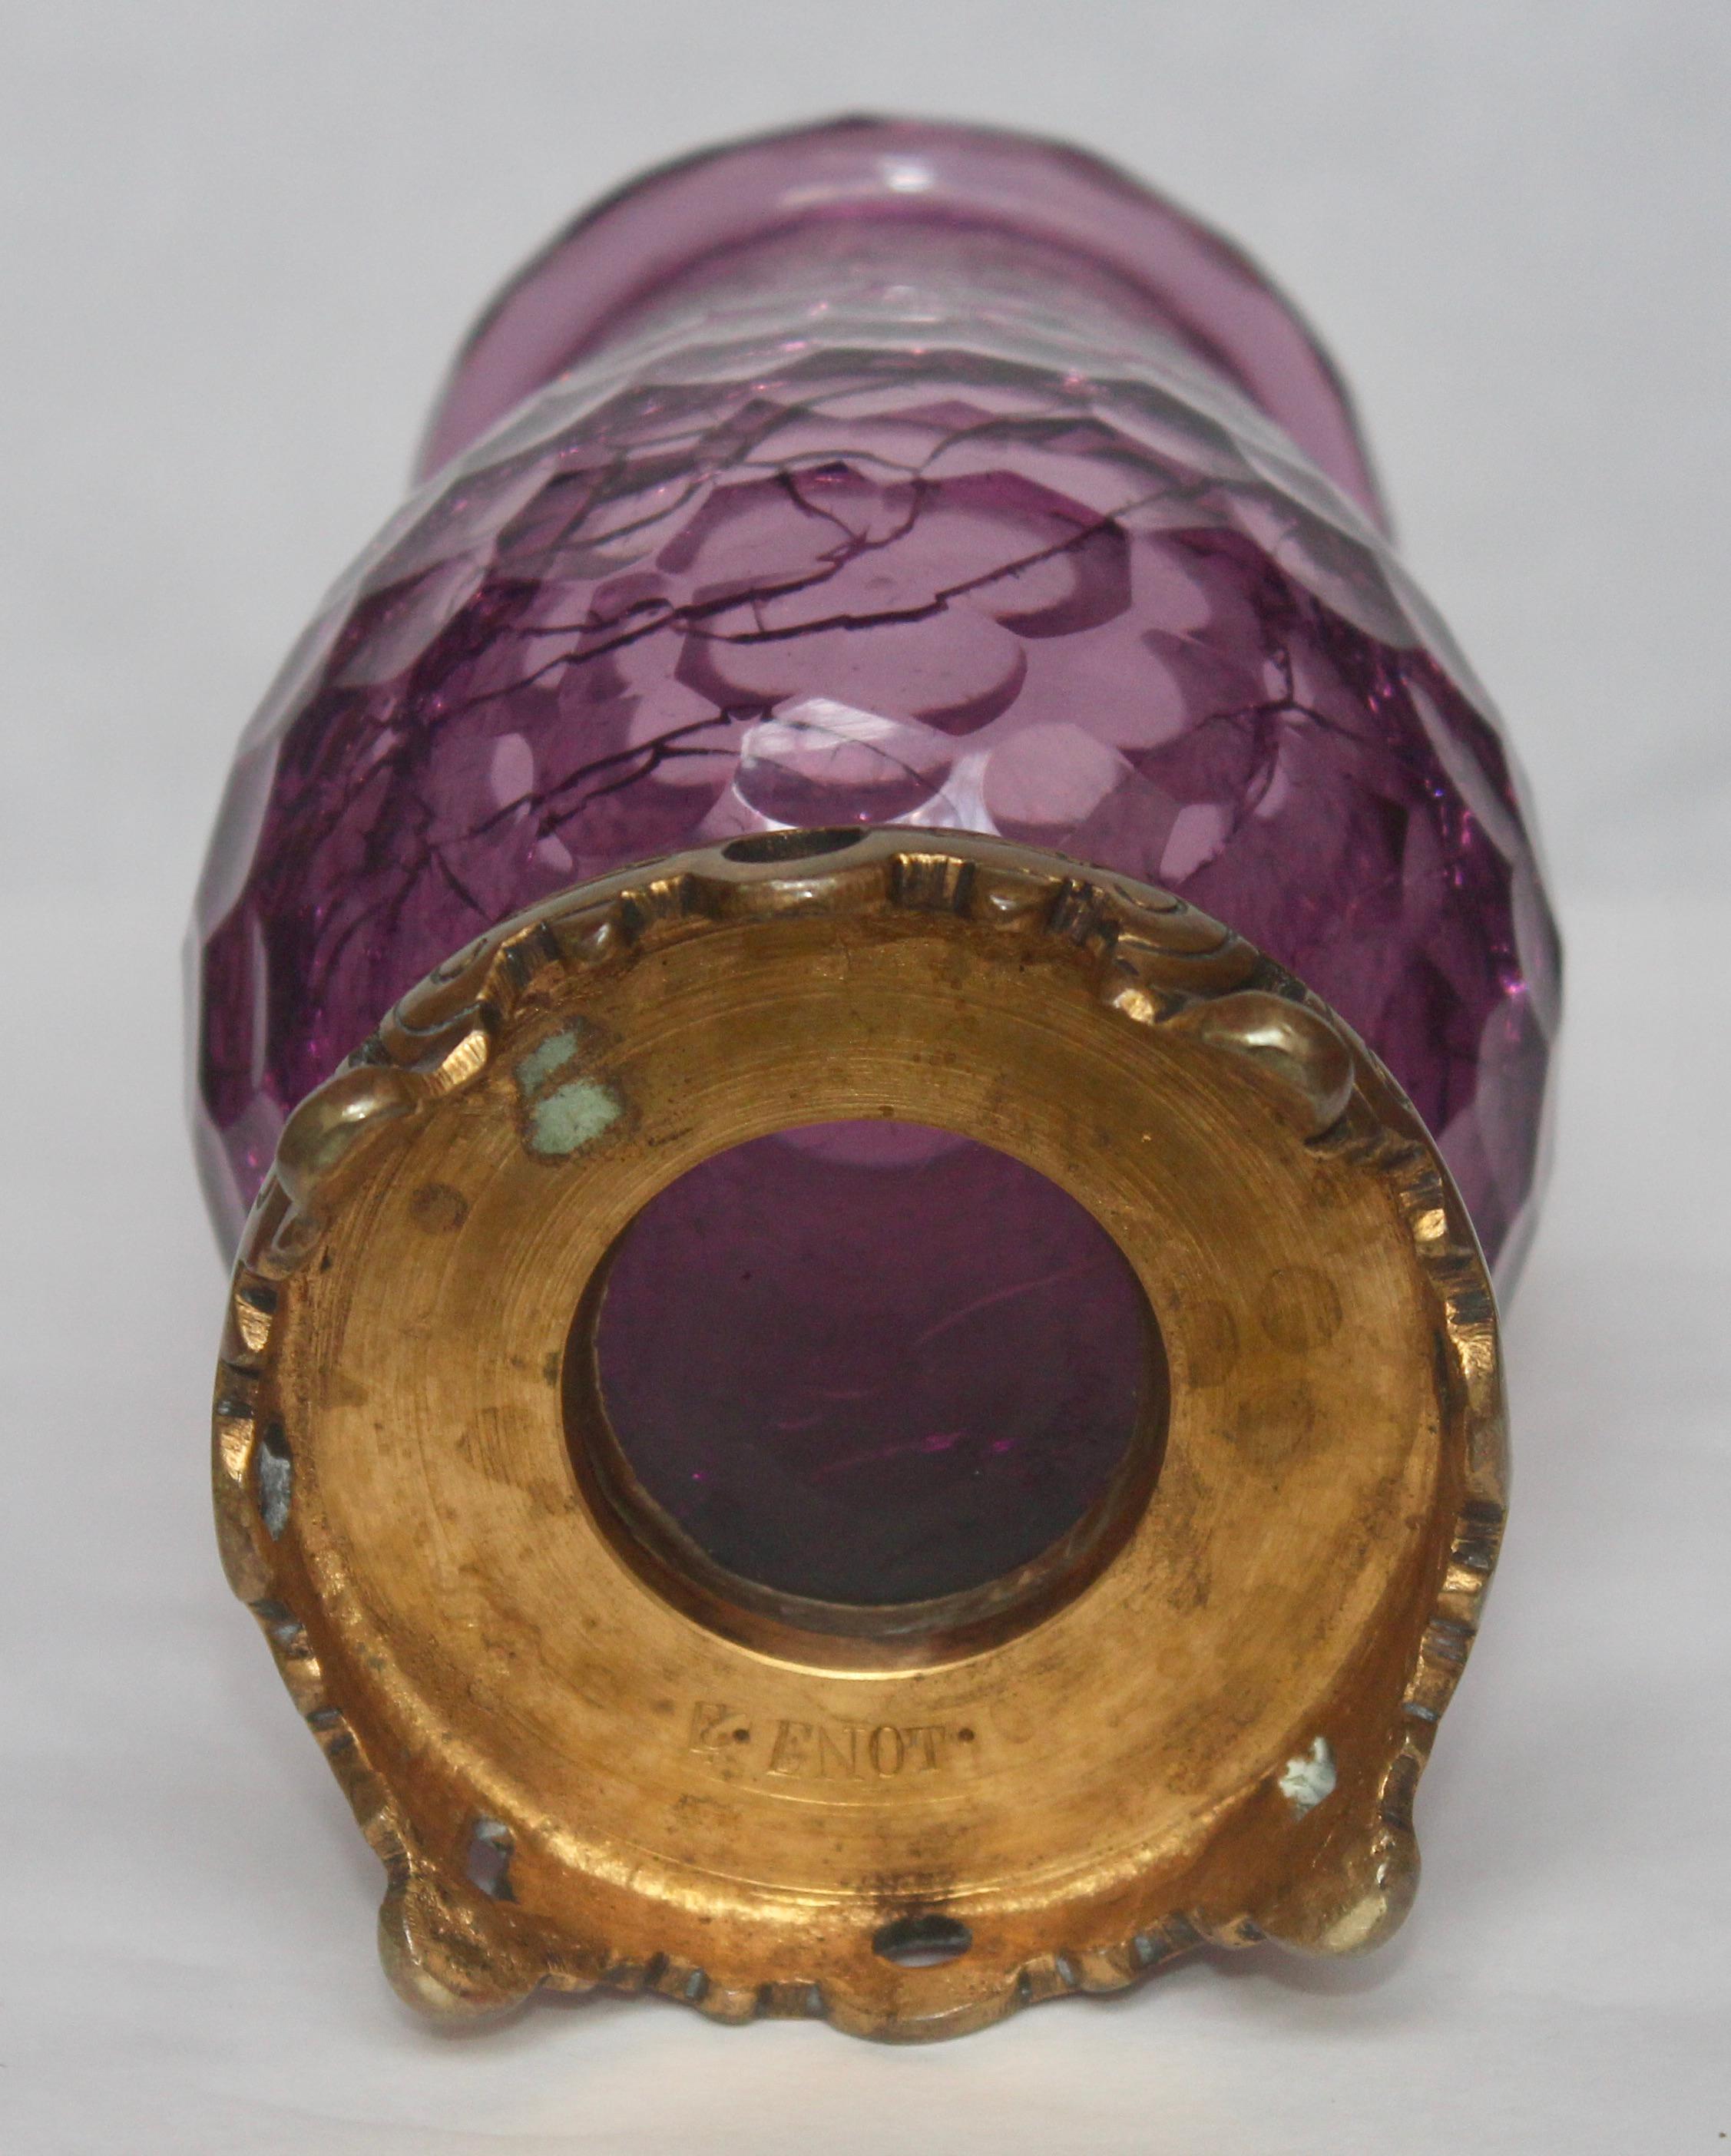 Late 19th Century Japonisme Crackled Baccarat Crystal Vase, Ormolu Mount by Edmond Enot